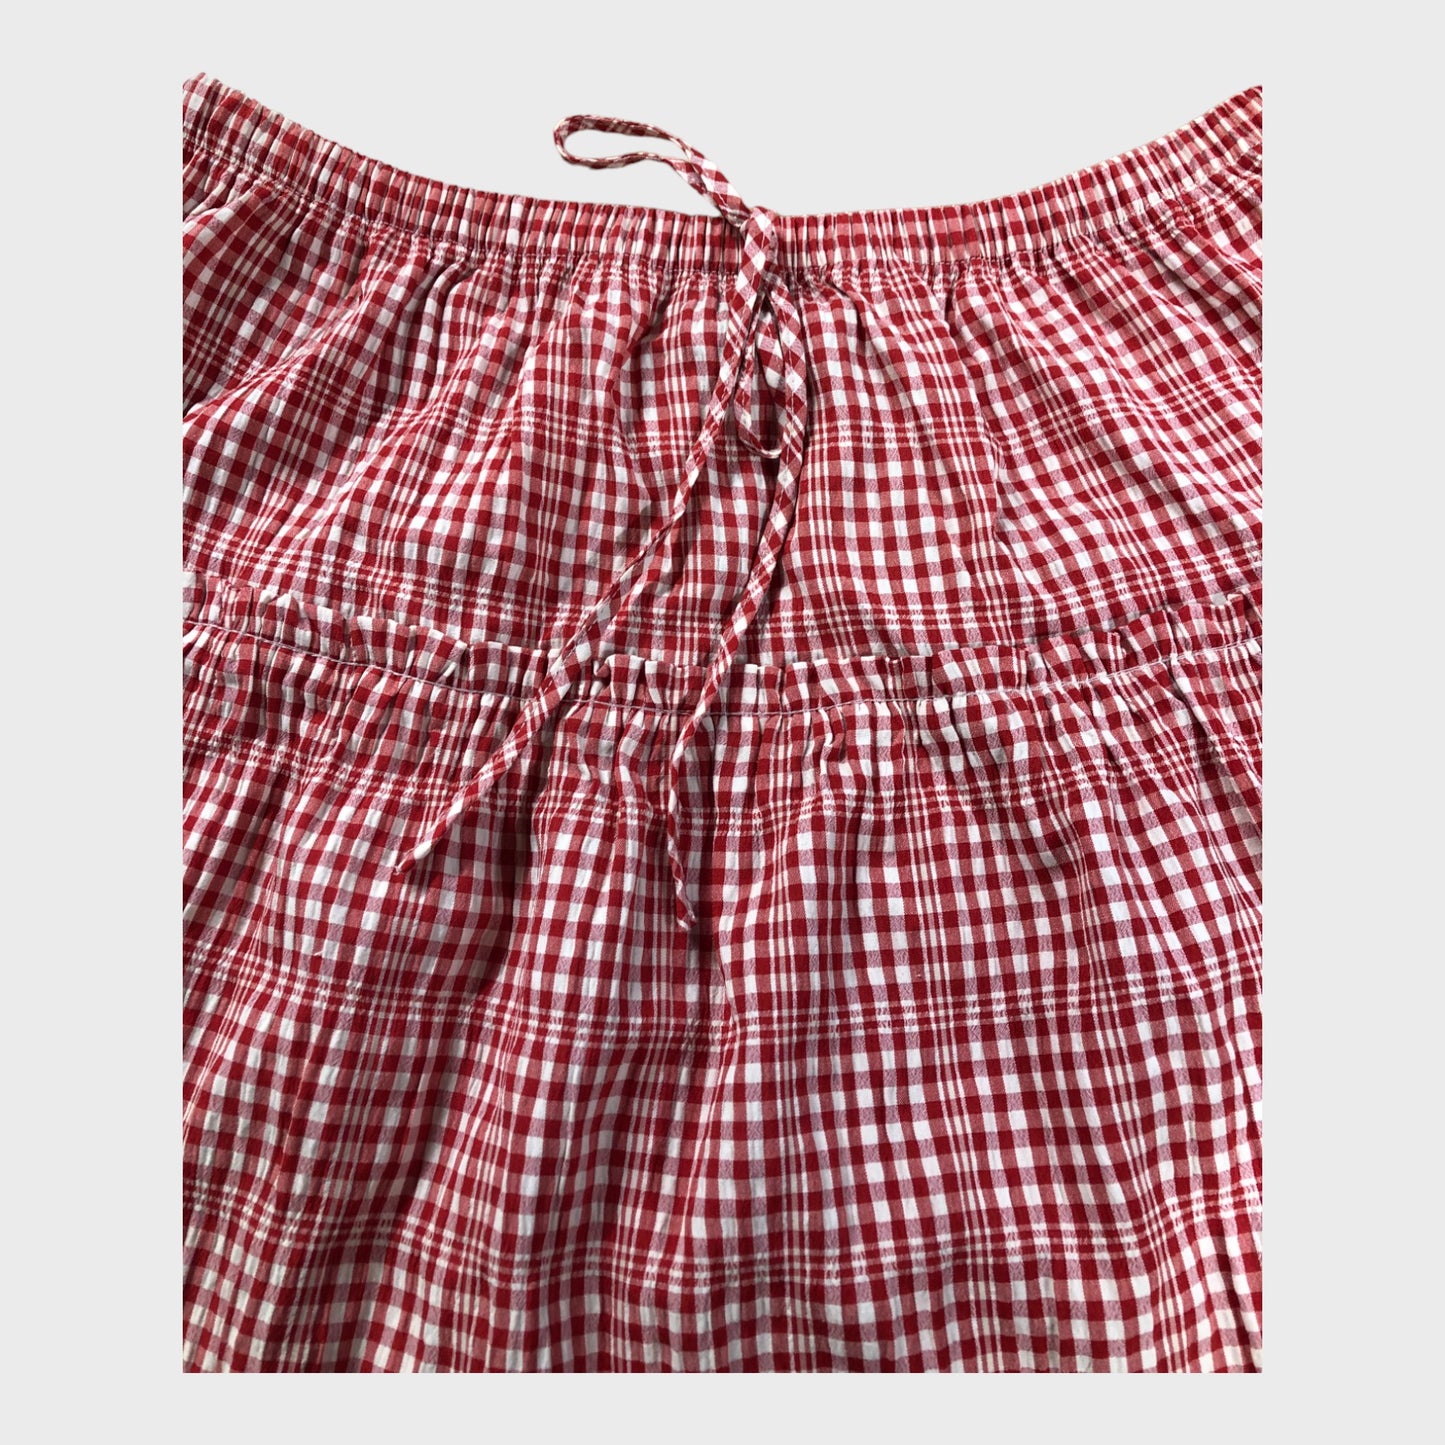 Red and white women's gingham skirt